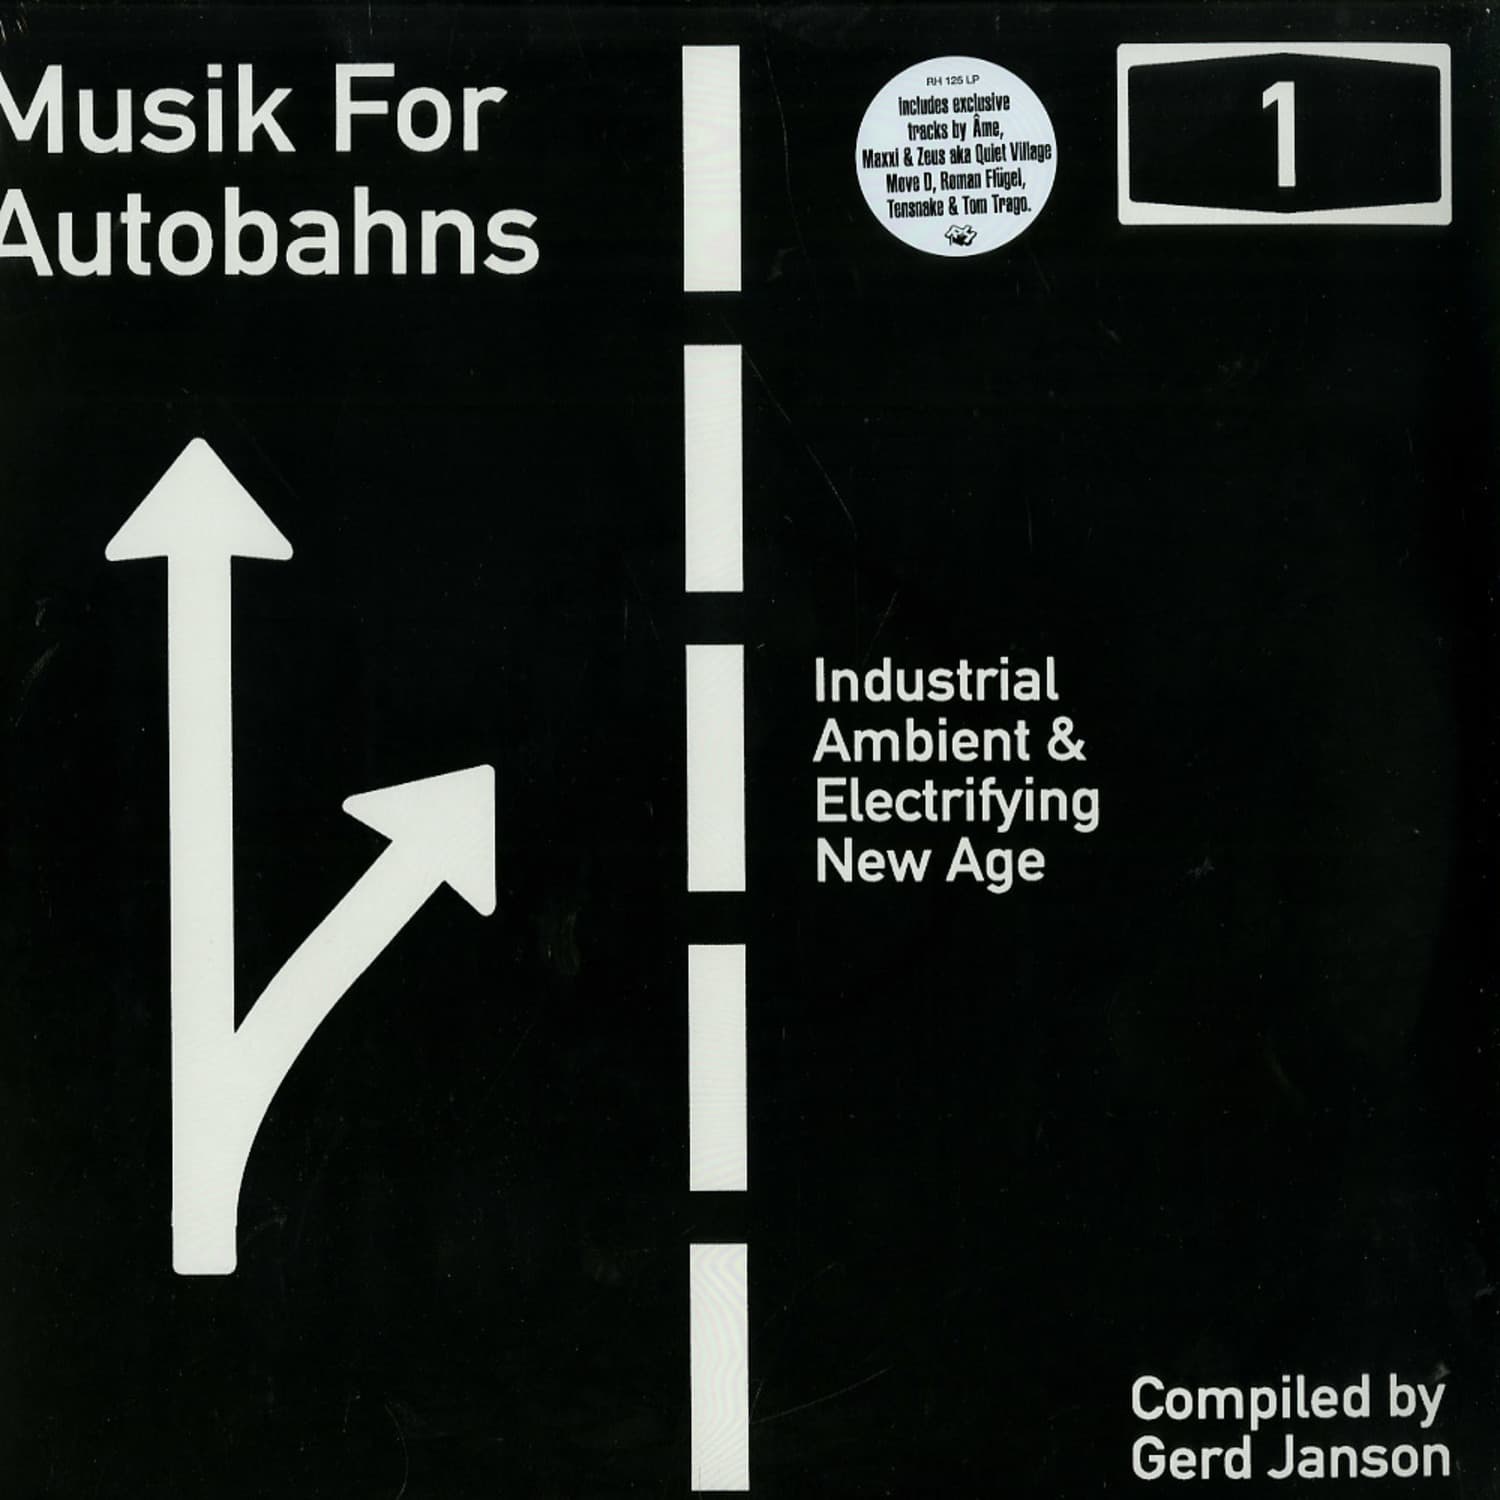 Gerd Janson Presents - MUSIK FOR AUTOBAHNS 